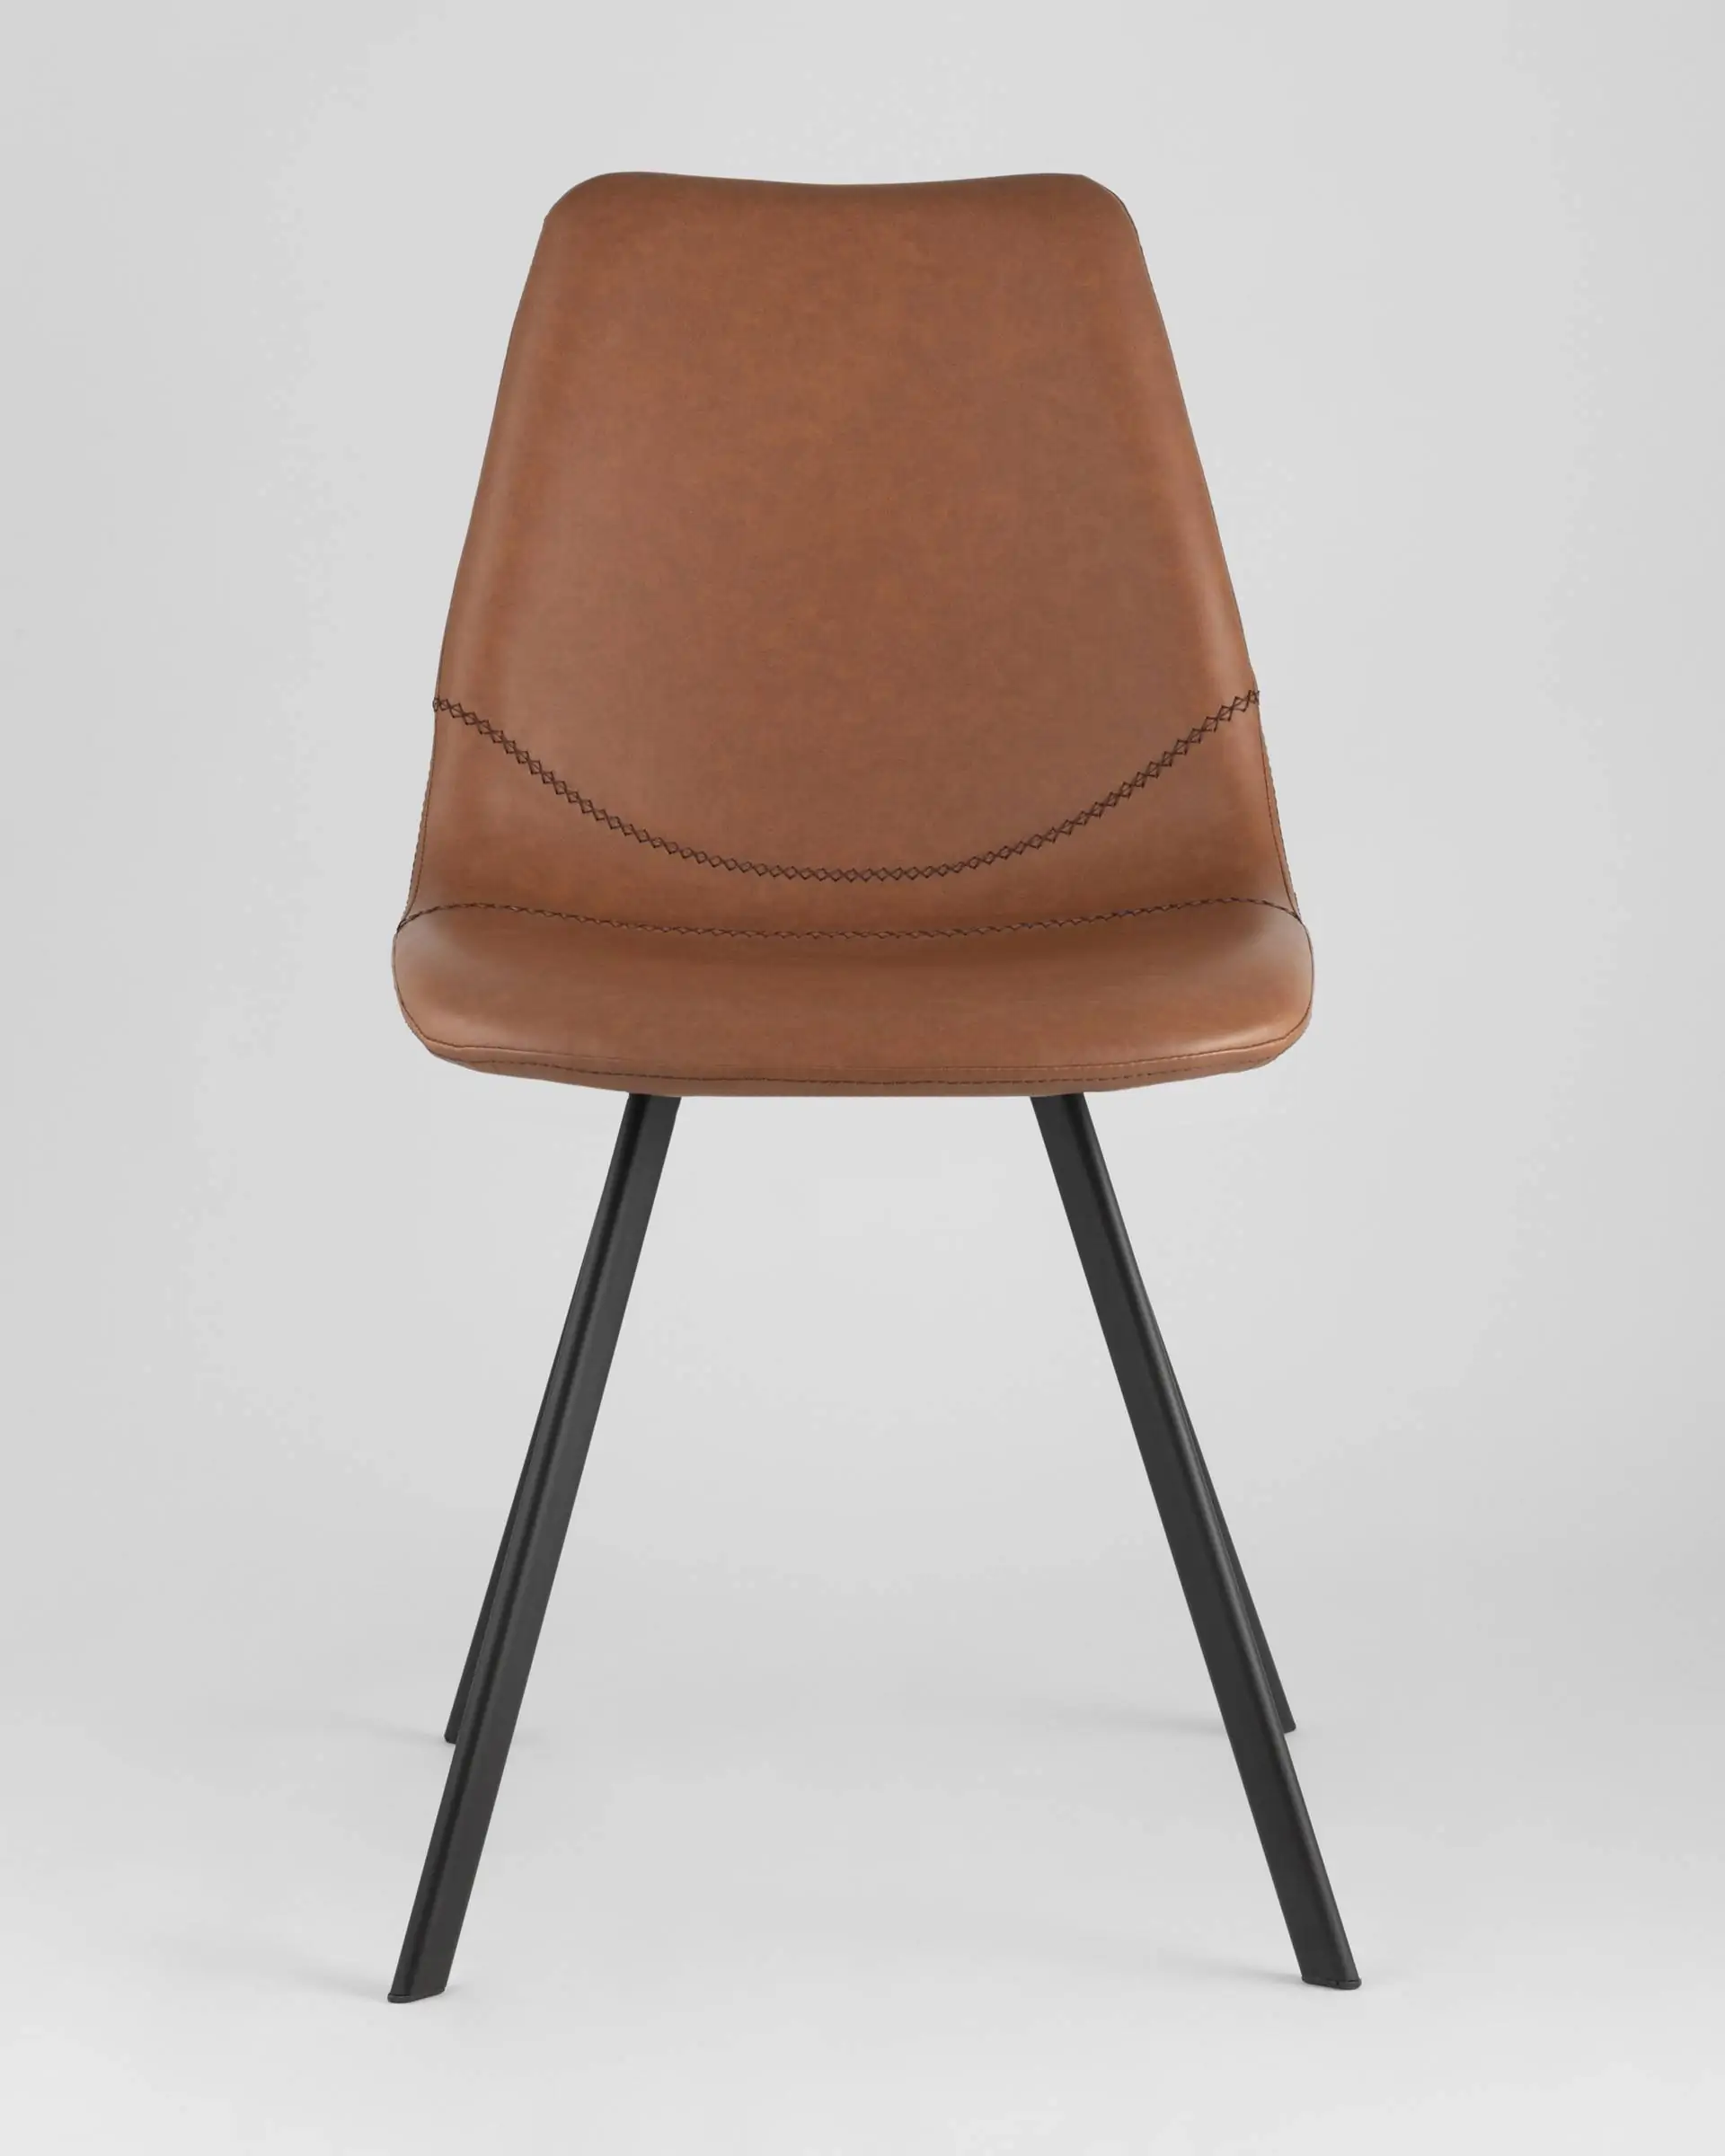 стул с коричневой обивкой